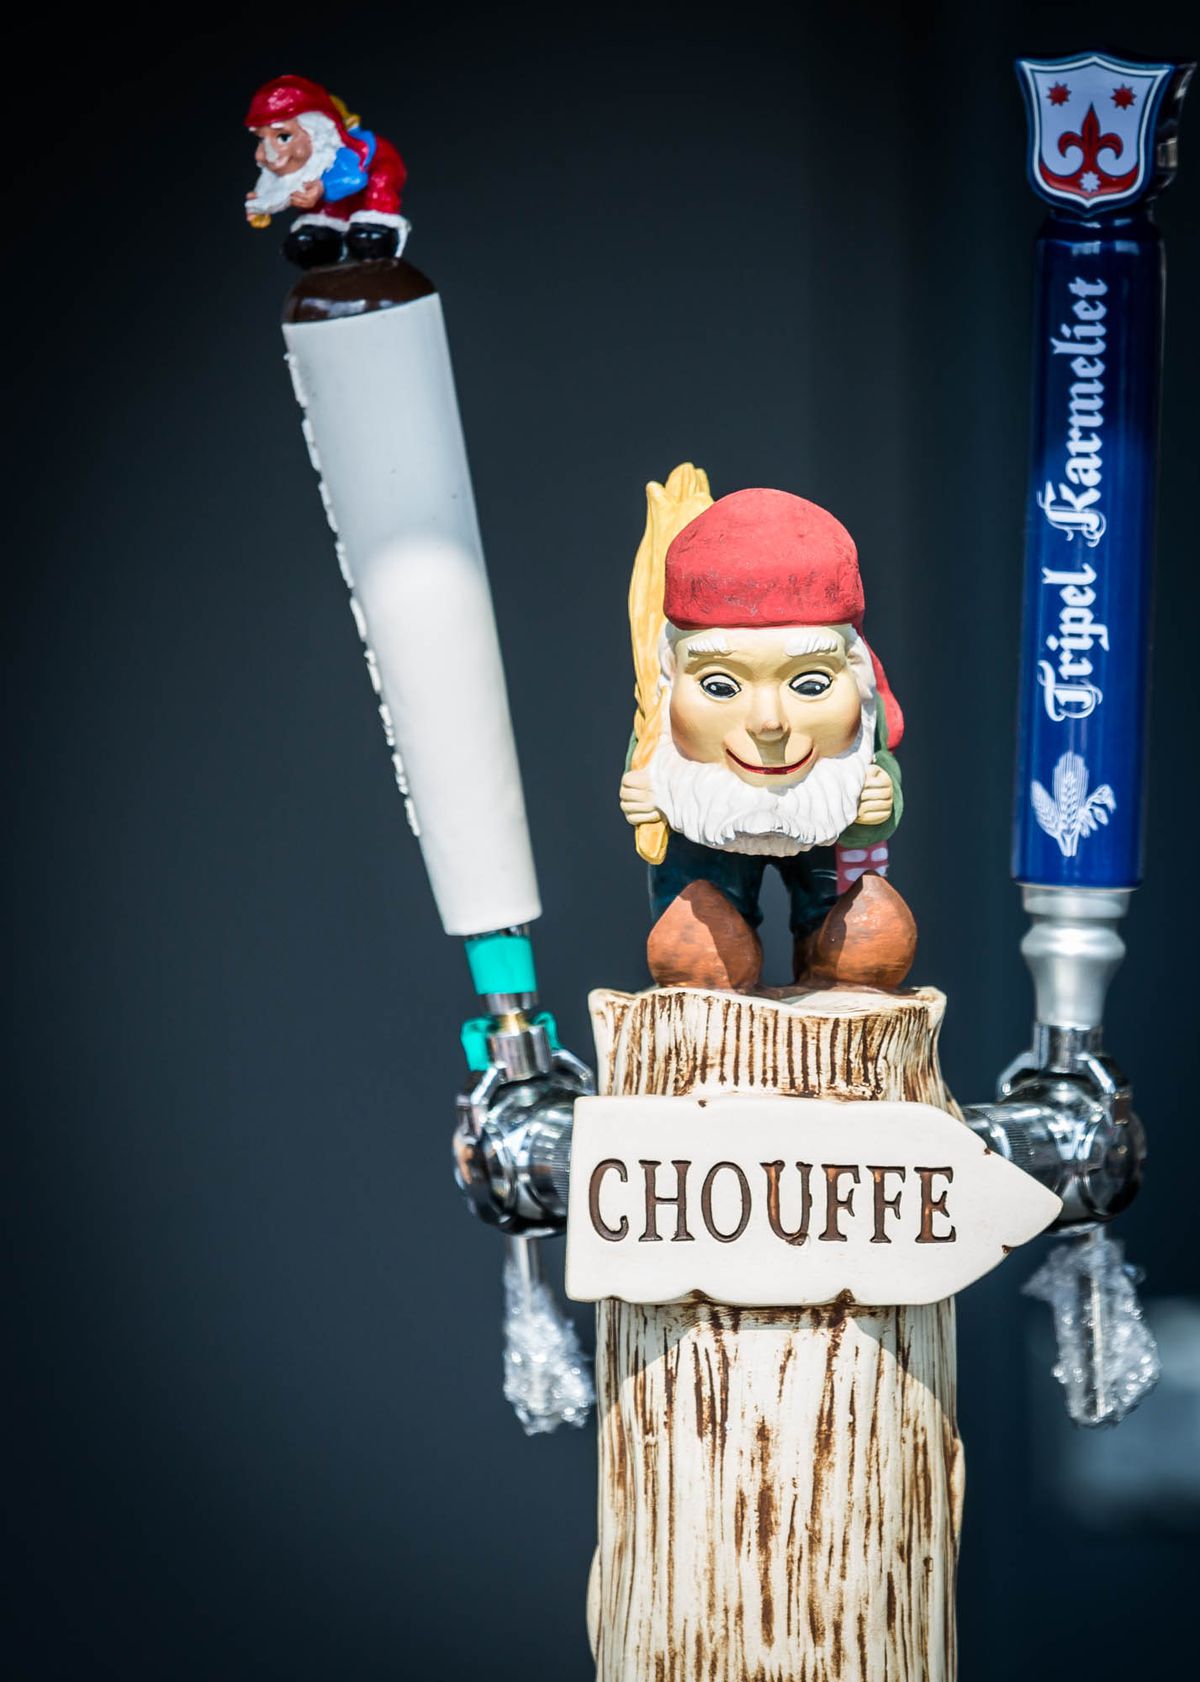 A chouffe beer tap